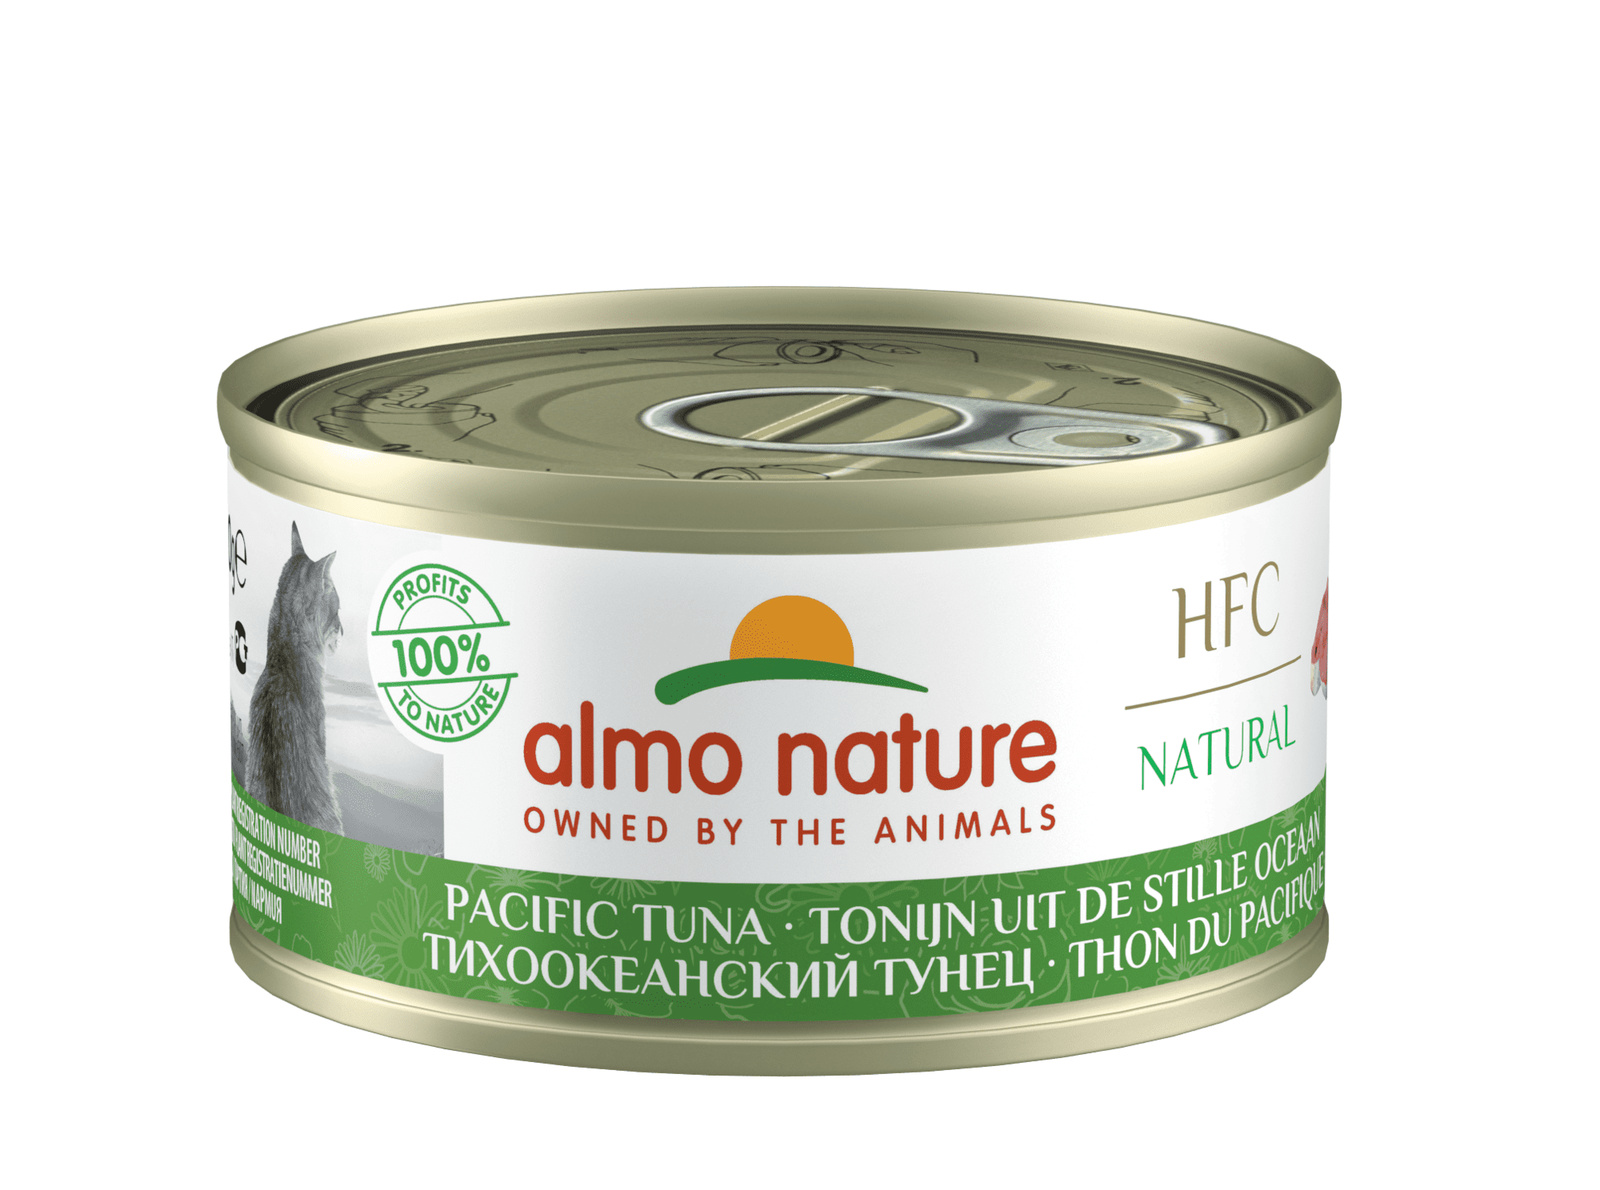 Almo Nature консервы Almo Nature консервы для кошек, с тихоокеанским тунцом (3,6 кг) almo nature консервы для кошек с тихоокеанским тунцом hfc adult cat pacific tuna 0 07 кг х 24 шт